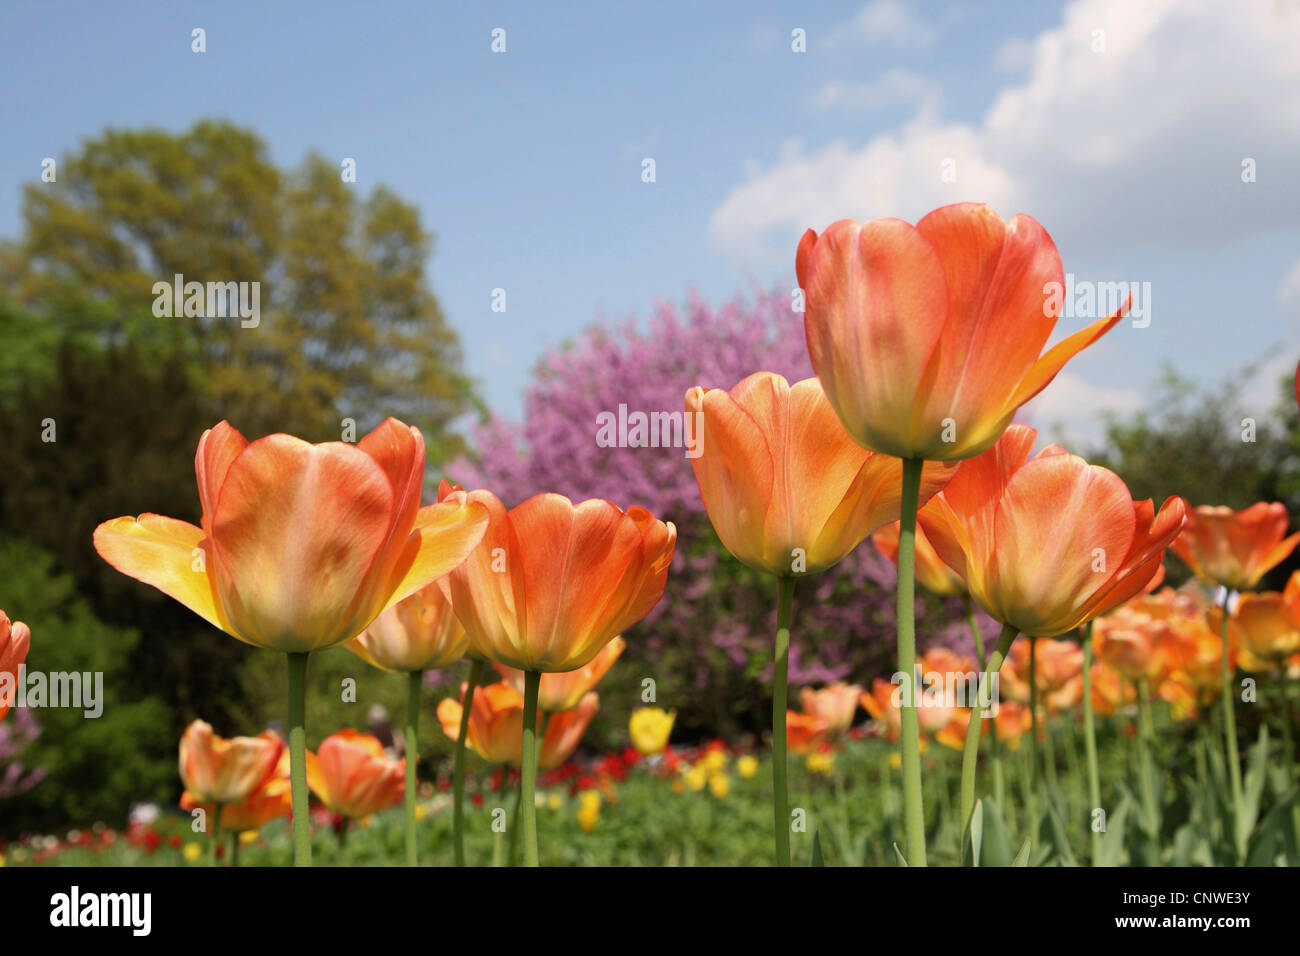 common garden tulip (Tulipa gesneriana), orange flowers Stock Photo